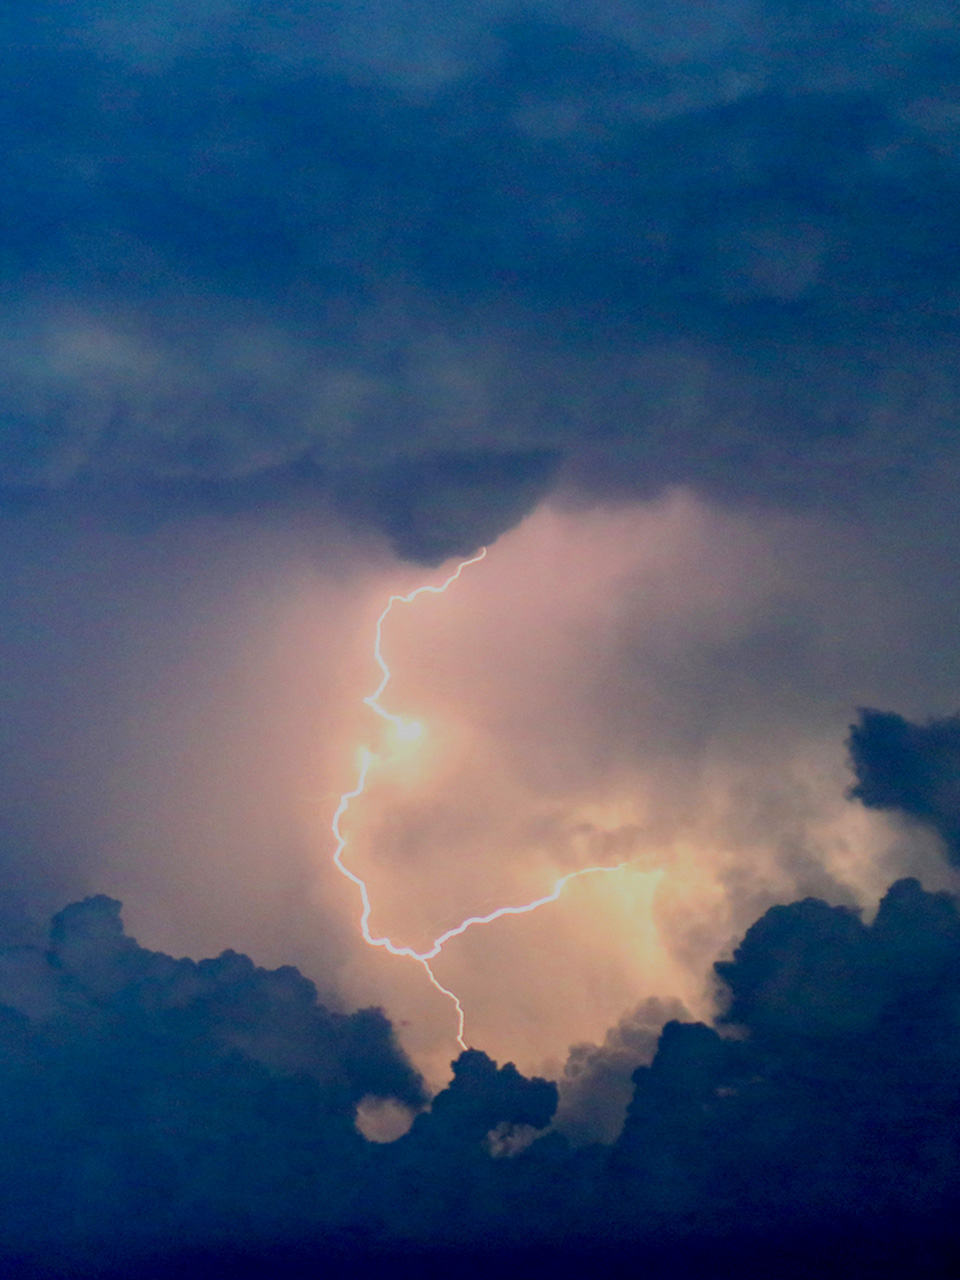 Heat Lightning': Fact or myth?